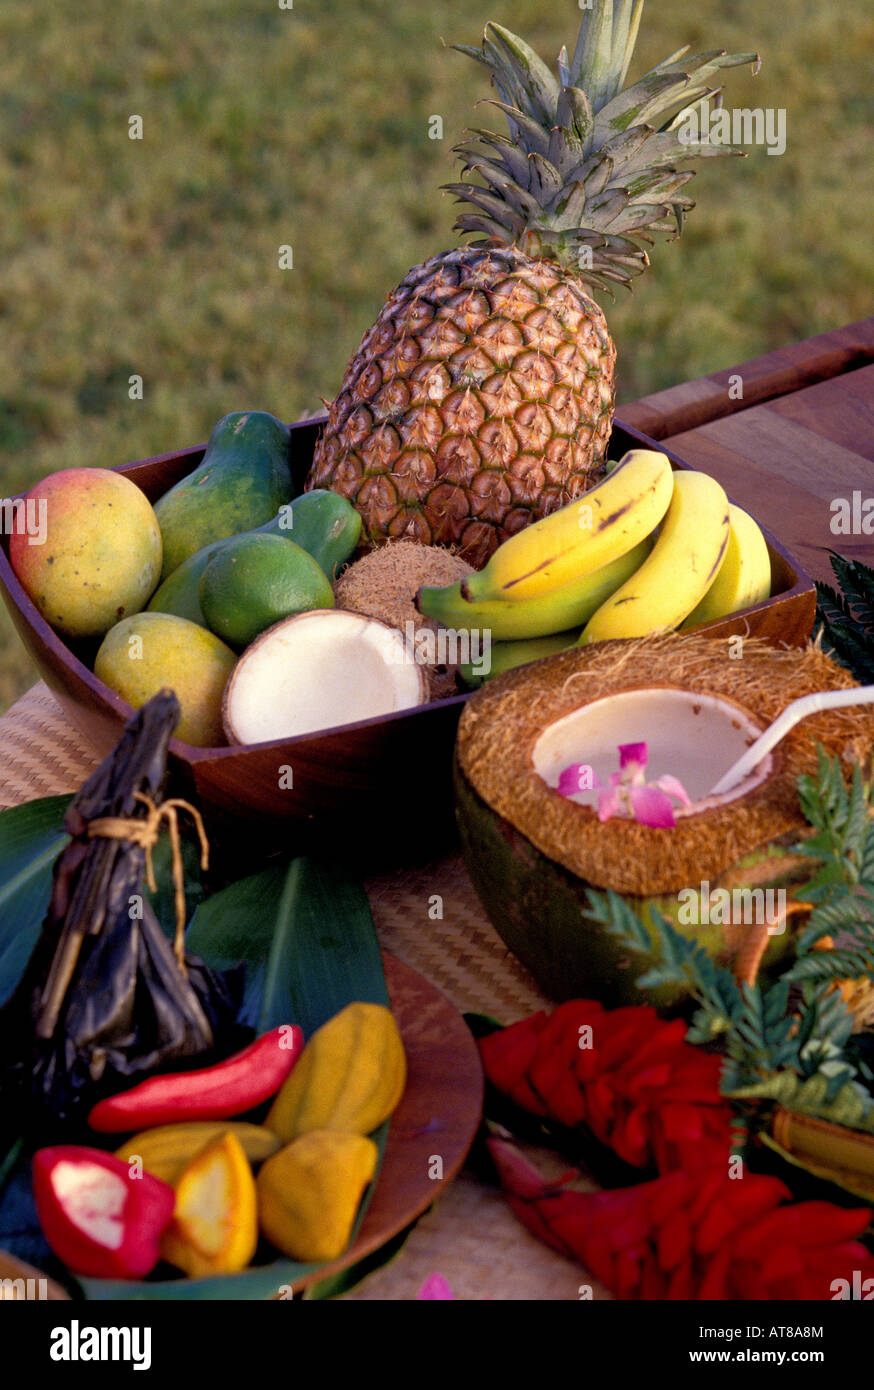 Arrangement of tropical fruits including pineapple, banana, mango, coconut and papaya Stock Photo